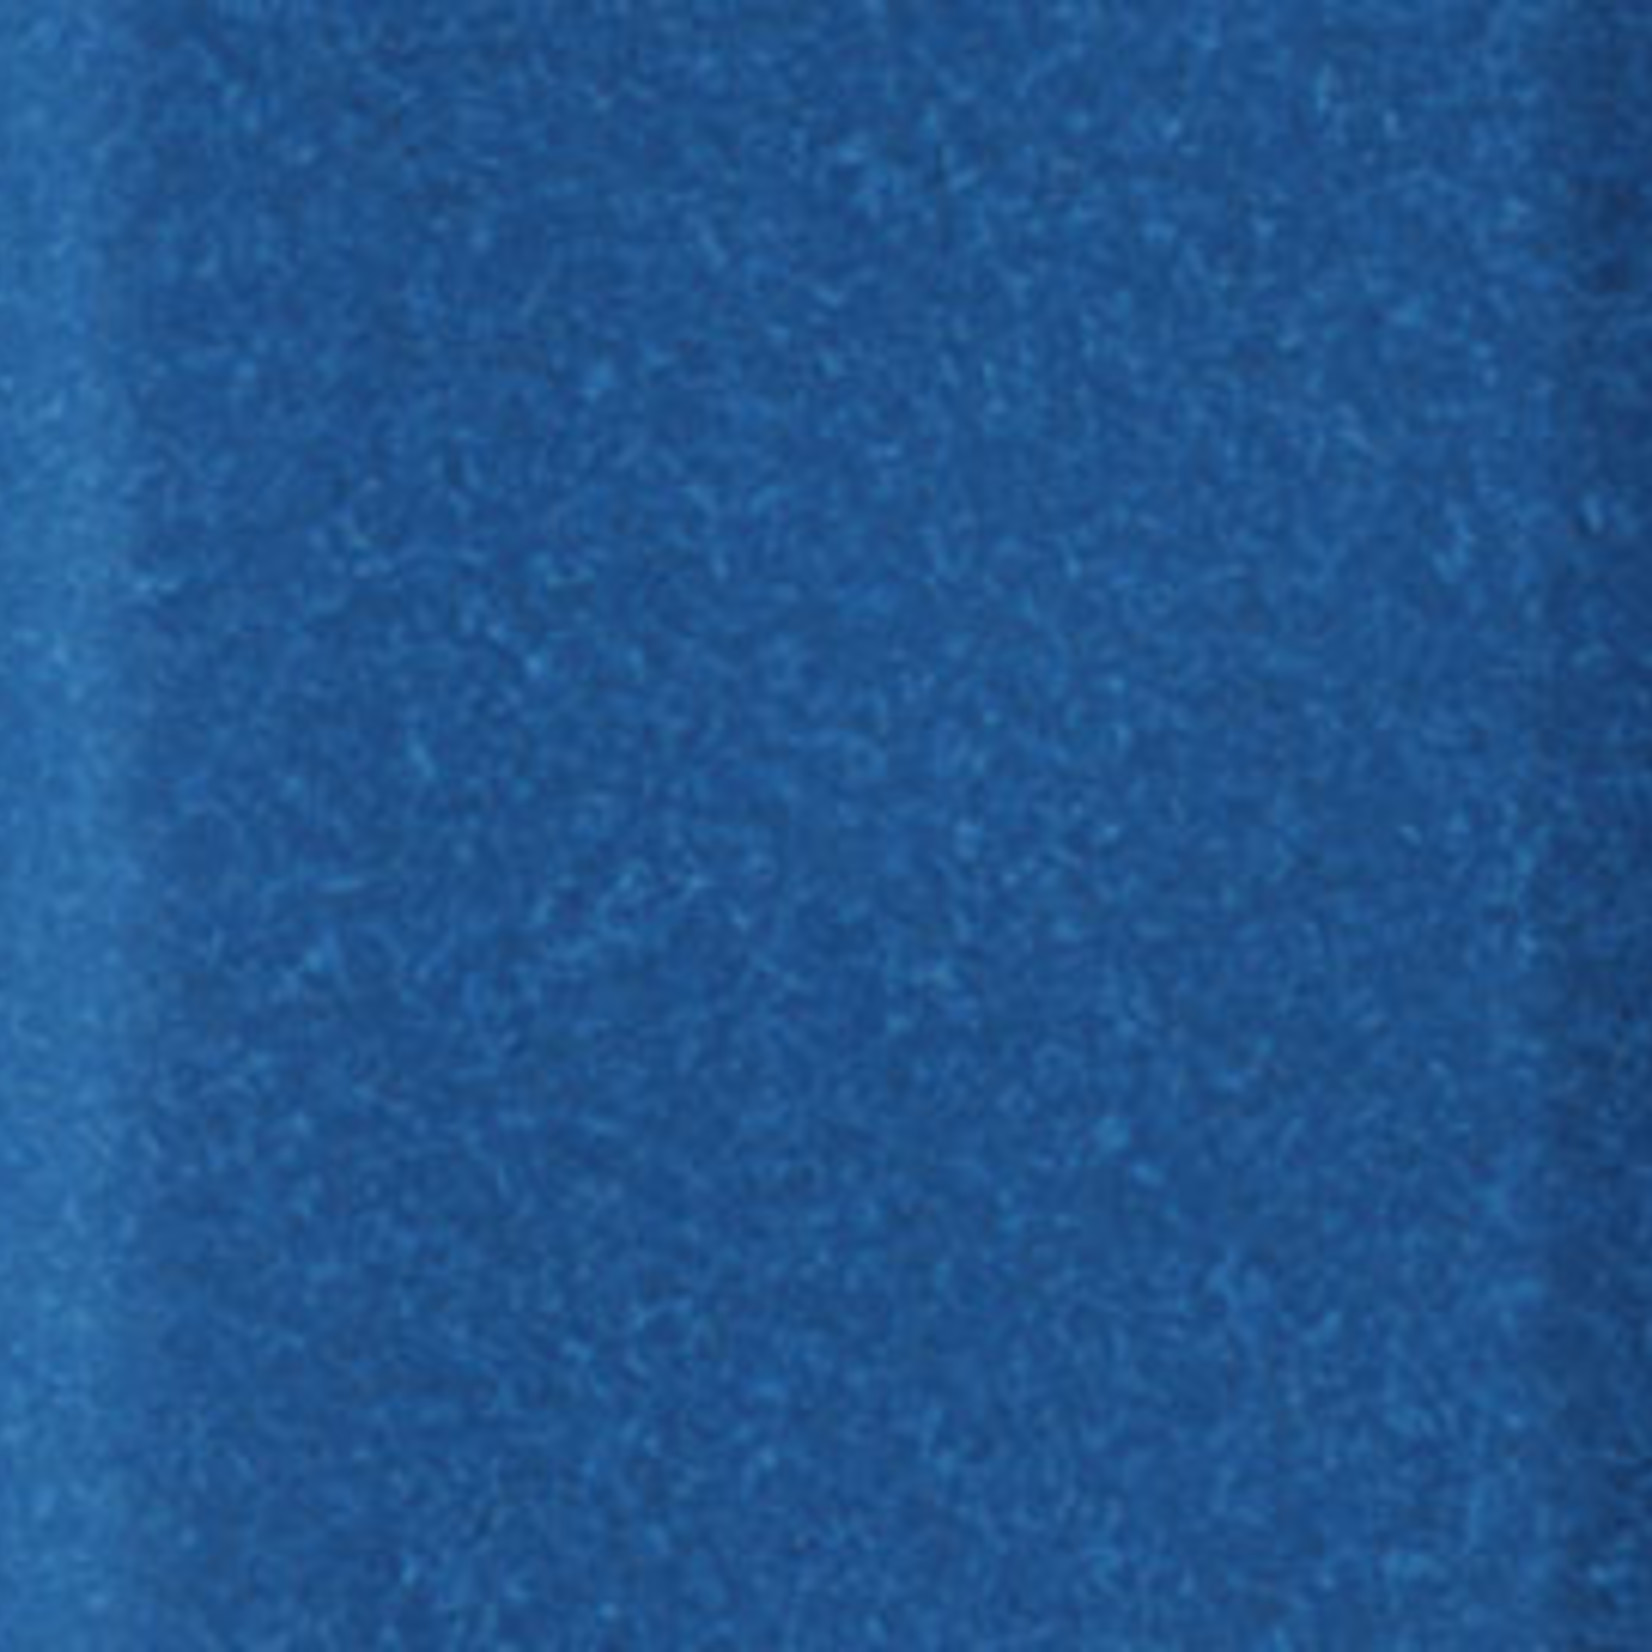 COPIC COPIC SKETCH B16 CYANINE BLUE